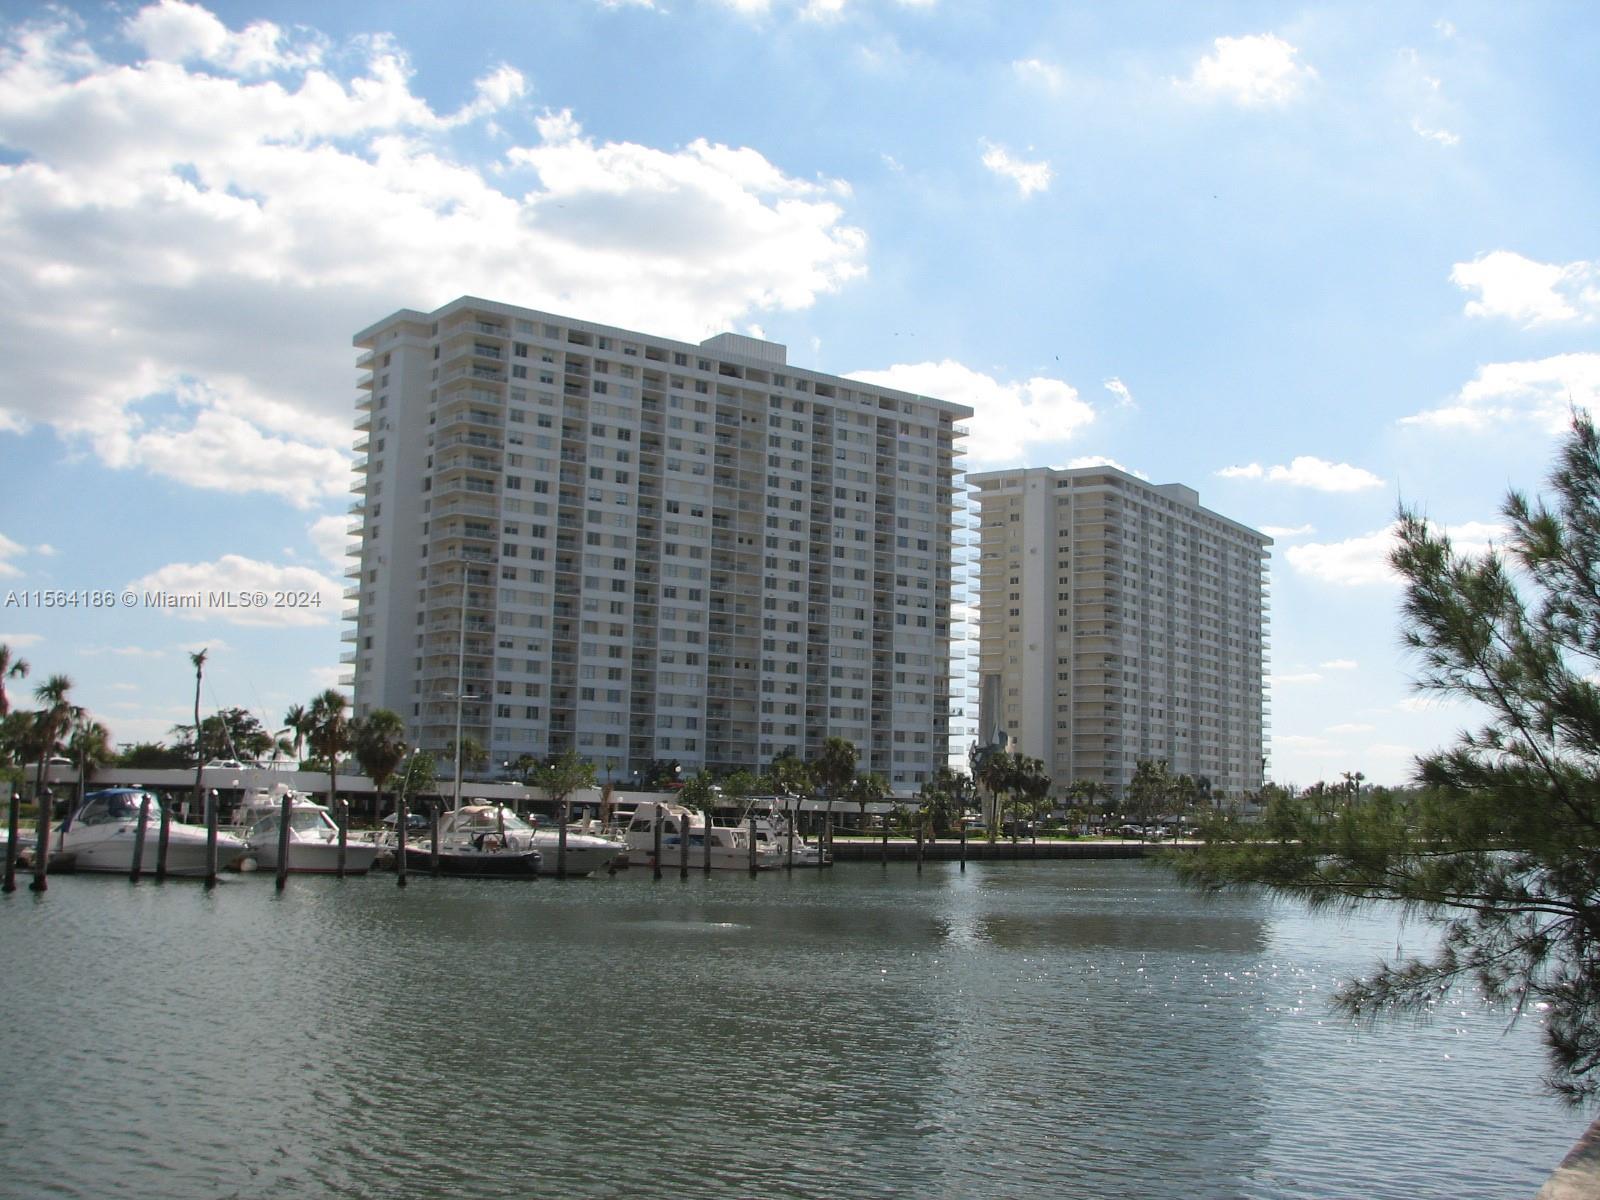 Rental Property at 300 Se Bayview Dr 410, Sunny Isles Beach, Miami-Dade County, Florida - Bedrooms: 2 
Bathrooms: 2  - $3,100 MO.